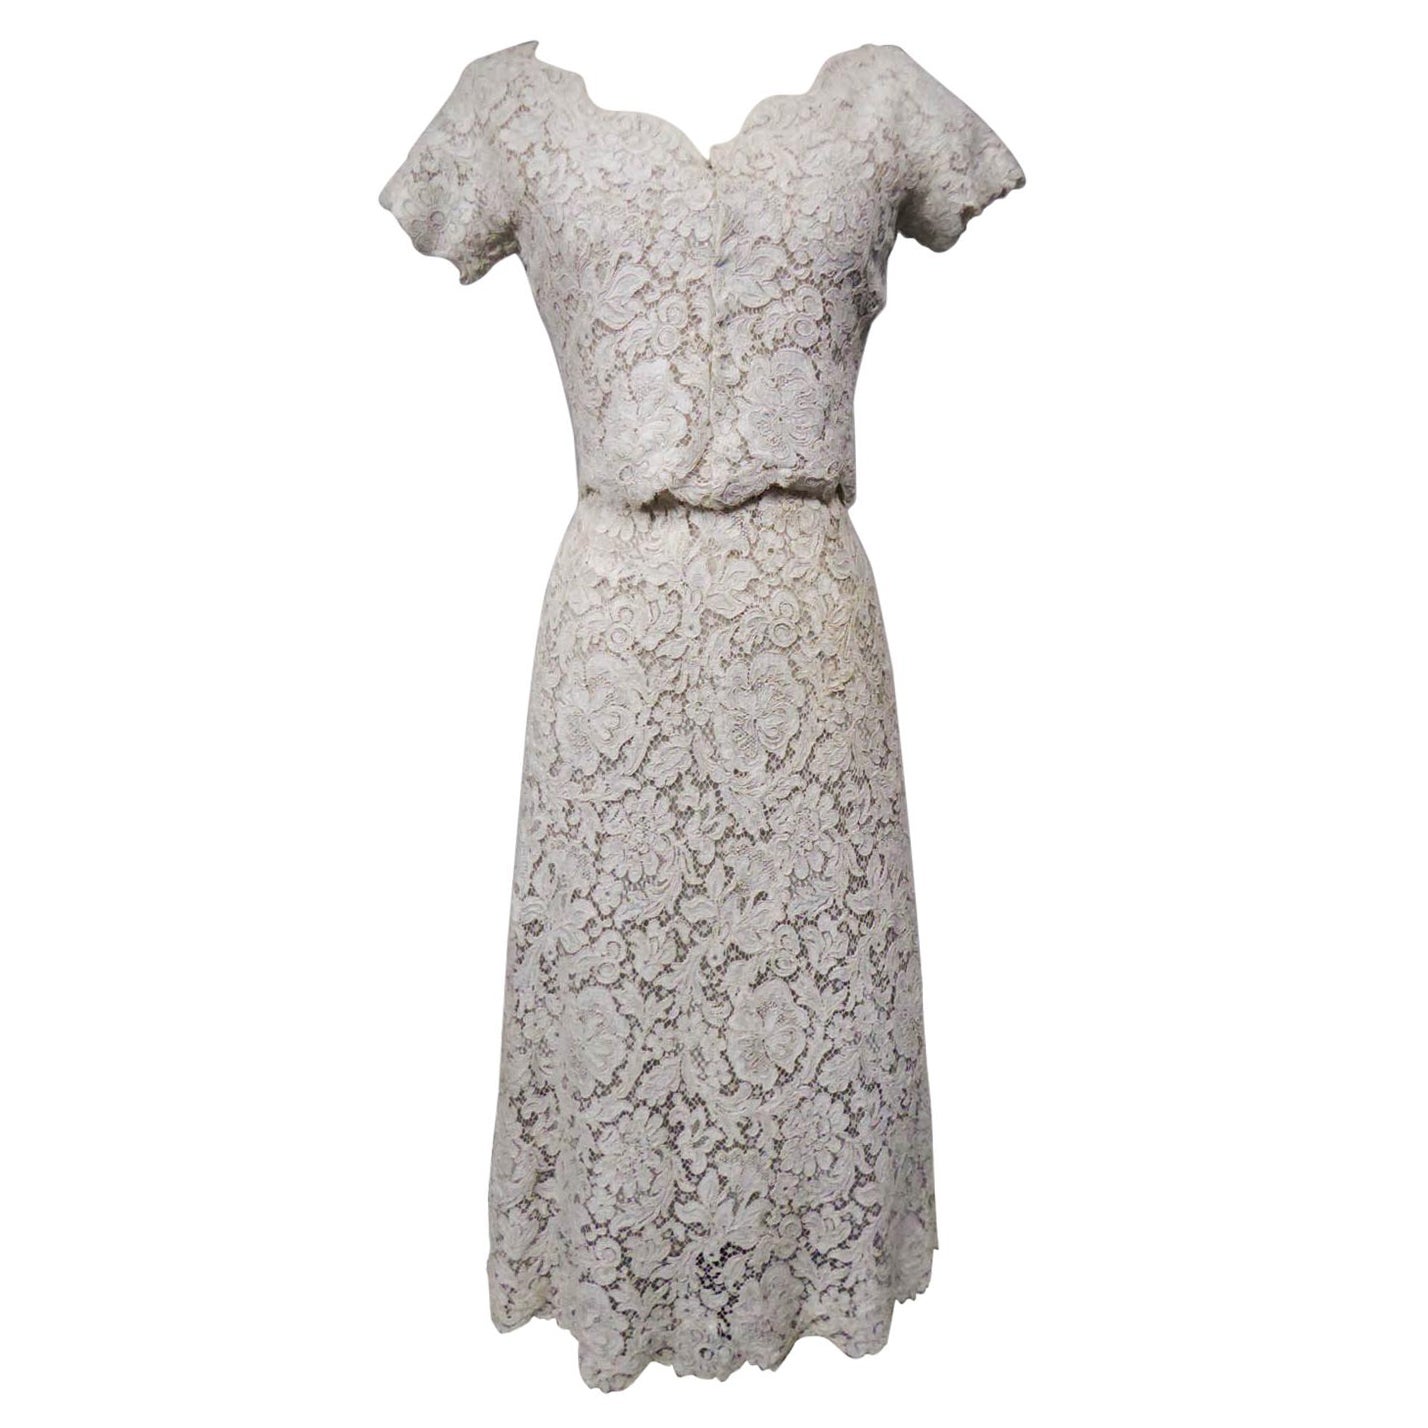 A Dior/ Bohan Couture Cream Lace Dress and Bolero numbered 94445 Circa 1965